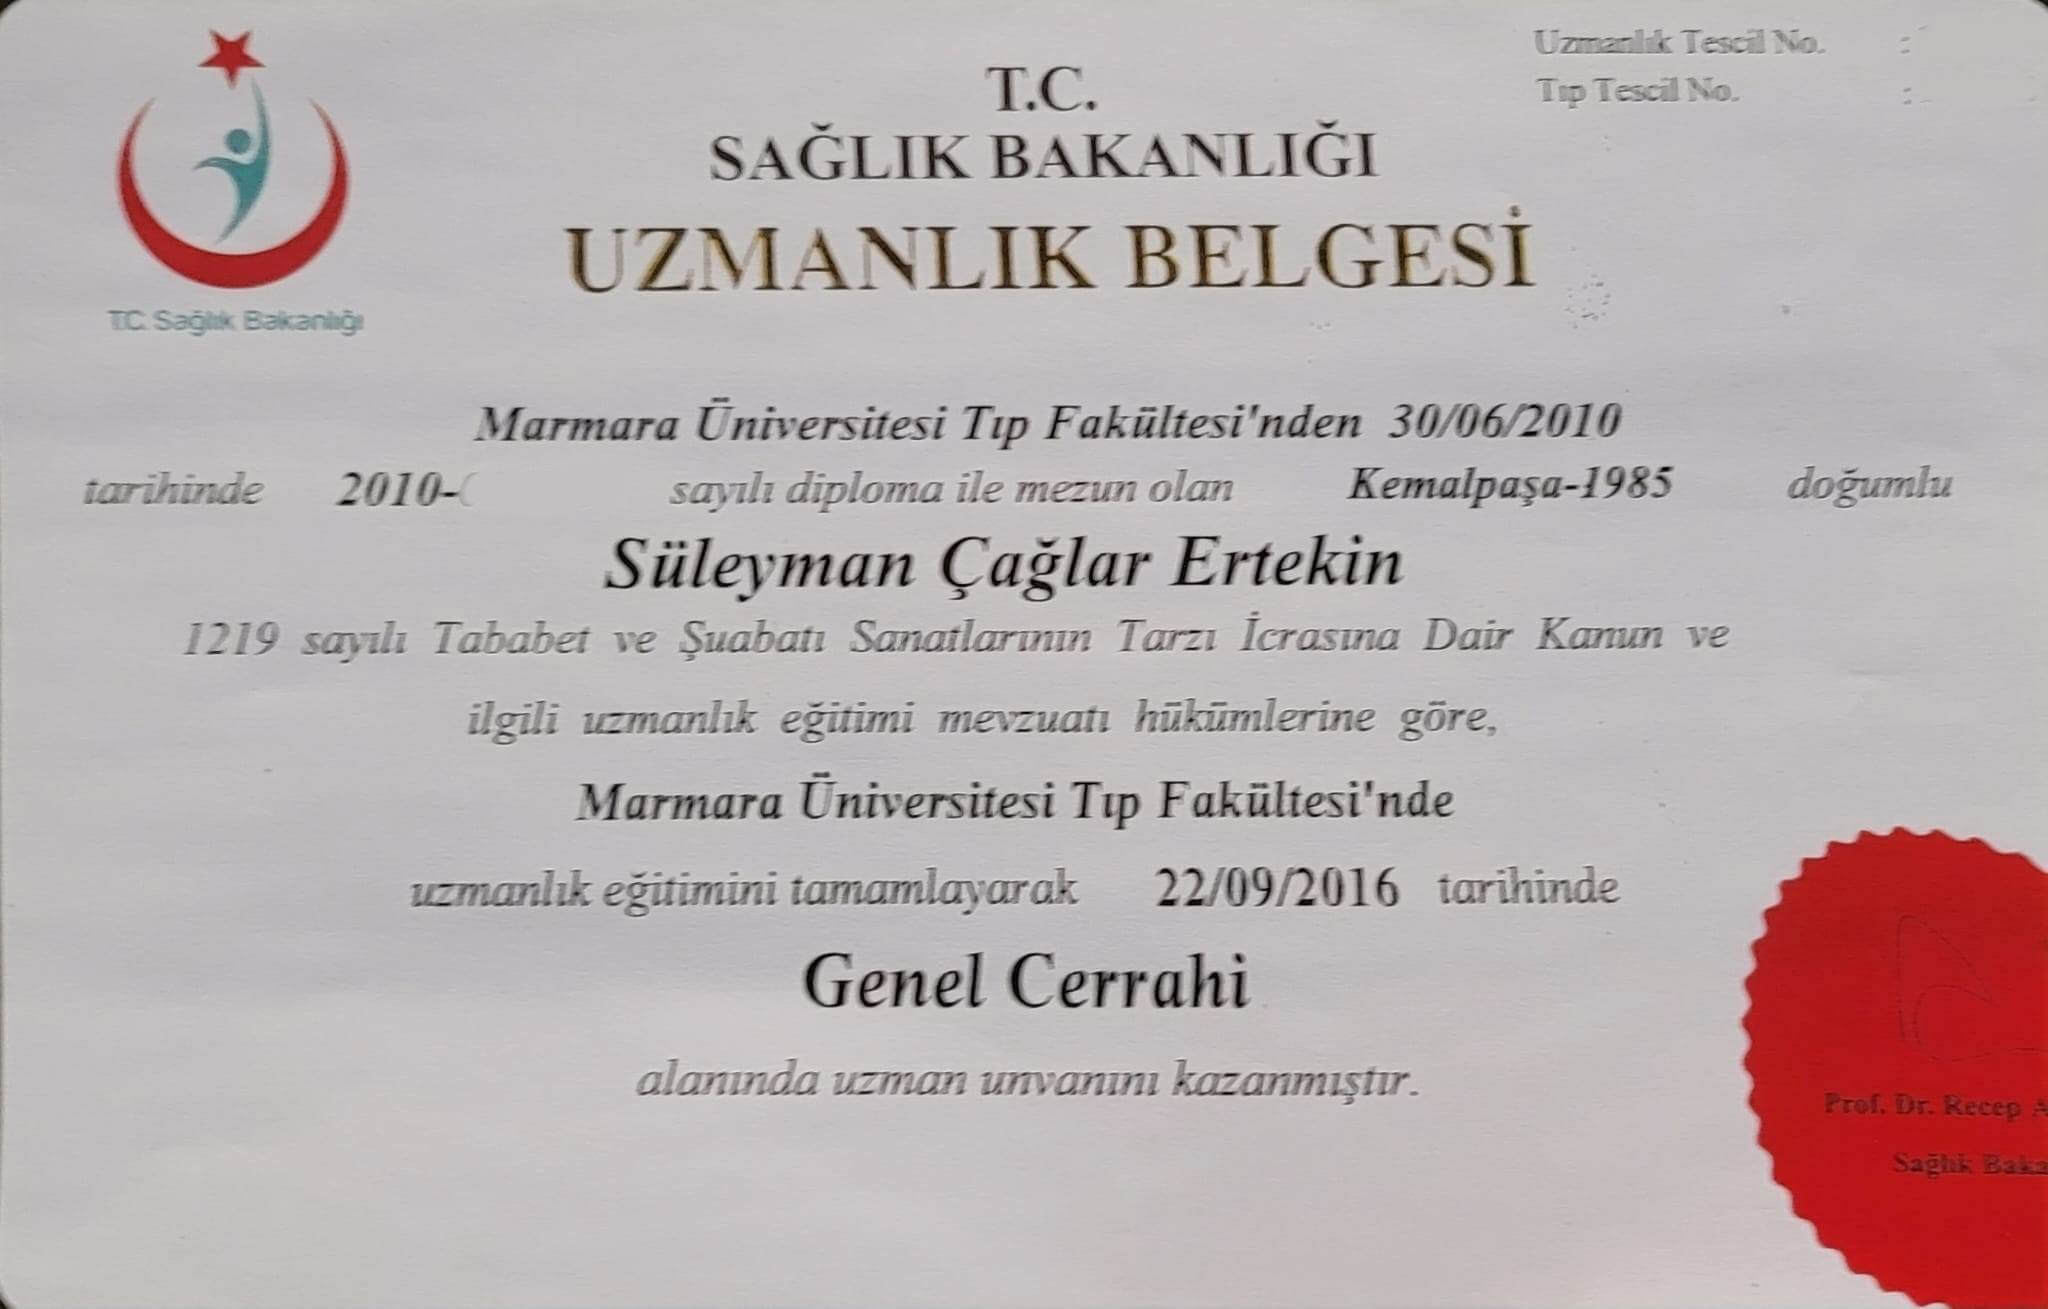 Caglar Ertekin - general surgery specialization certificate